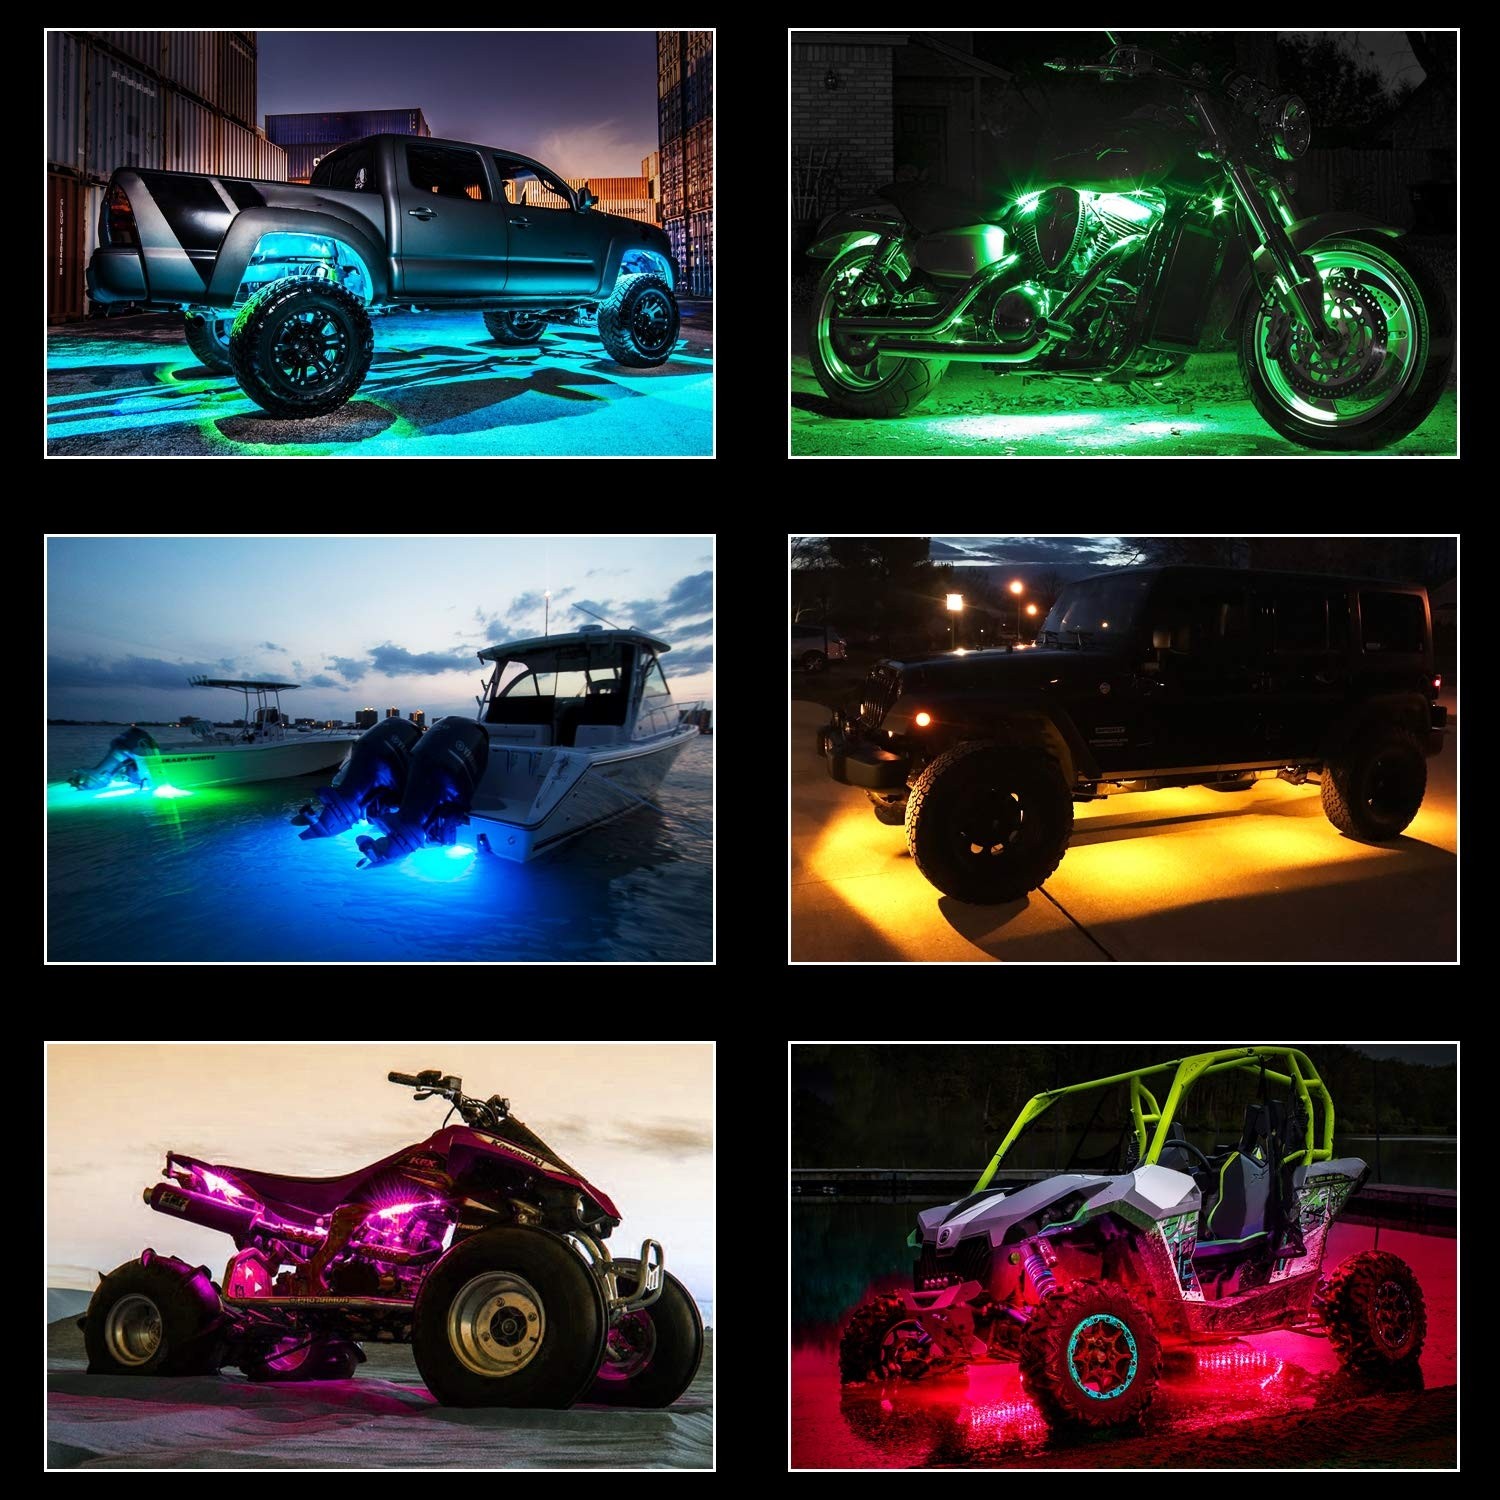 8x RGB LED Rock Light Kit For Off-Road Underglow Foot Wheel Well Light  Truck ATV